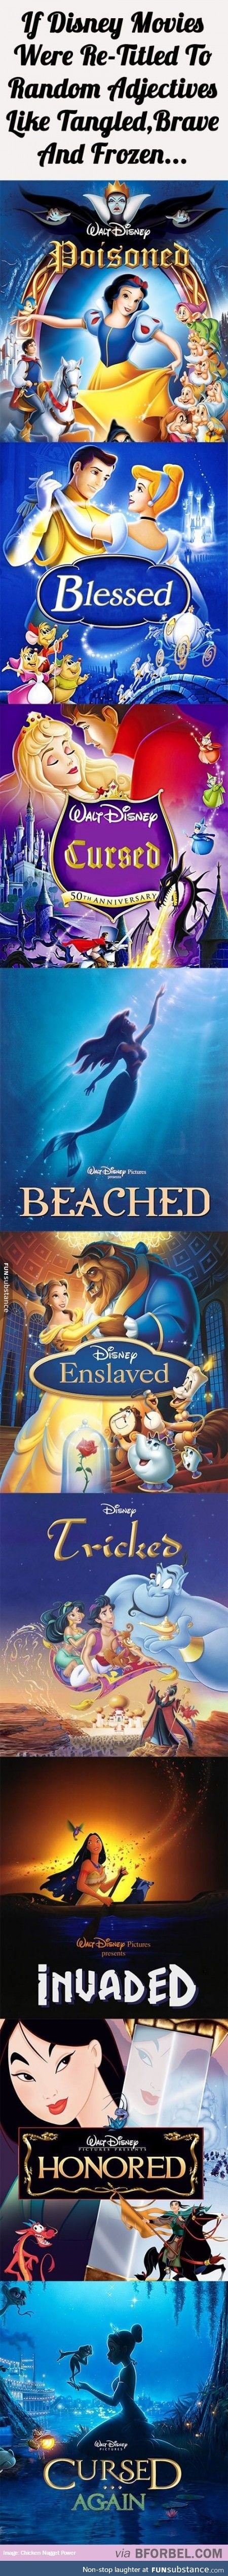 If Disney Movies...